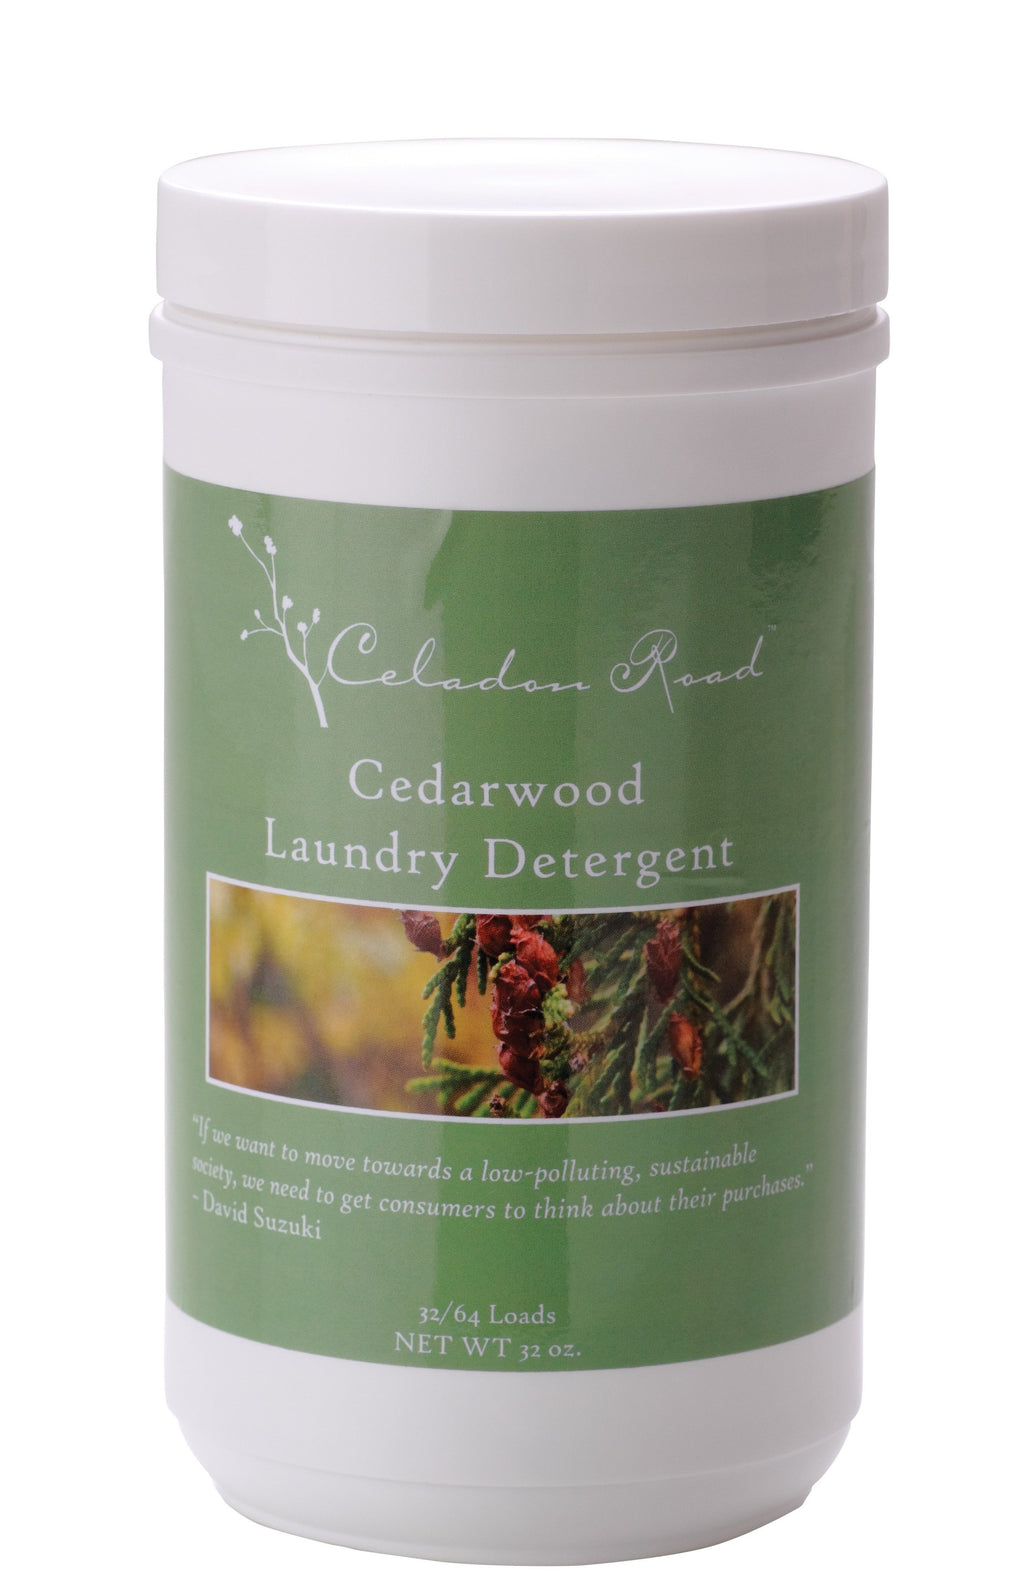 Cedarwood Laundry Detergent- Celadon Road- www.celadonroad.com